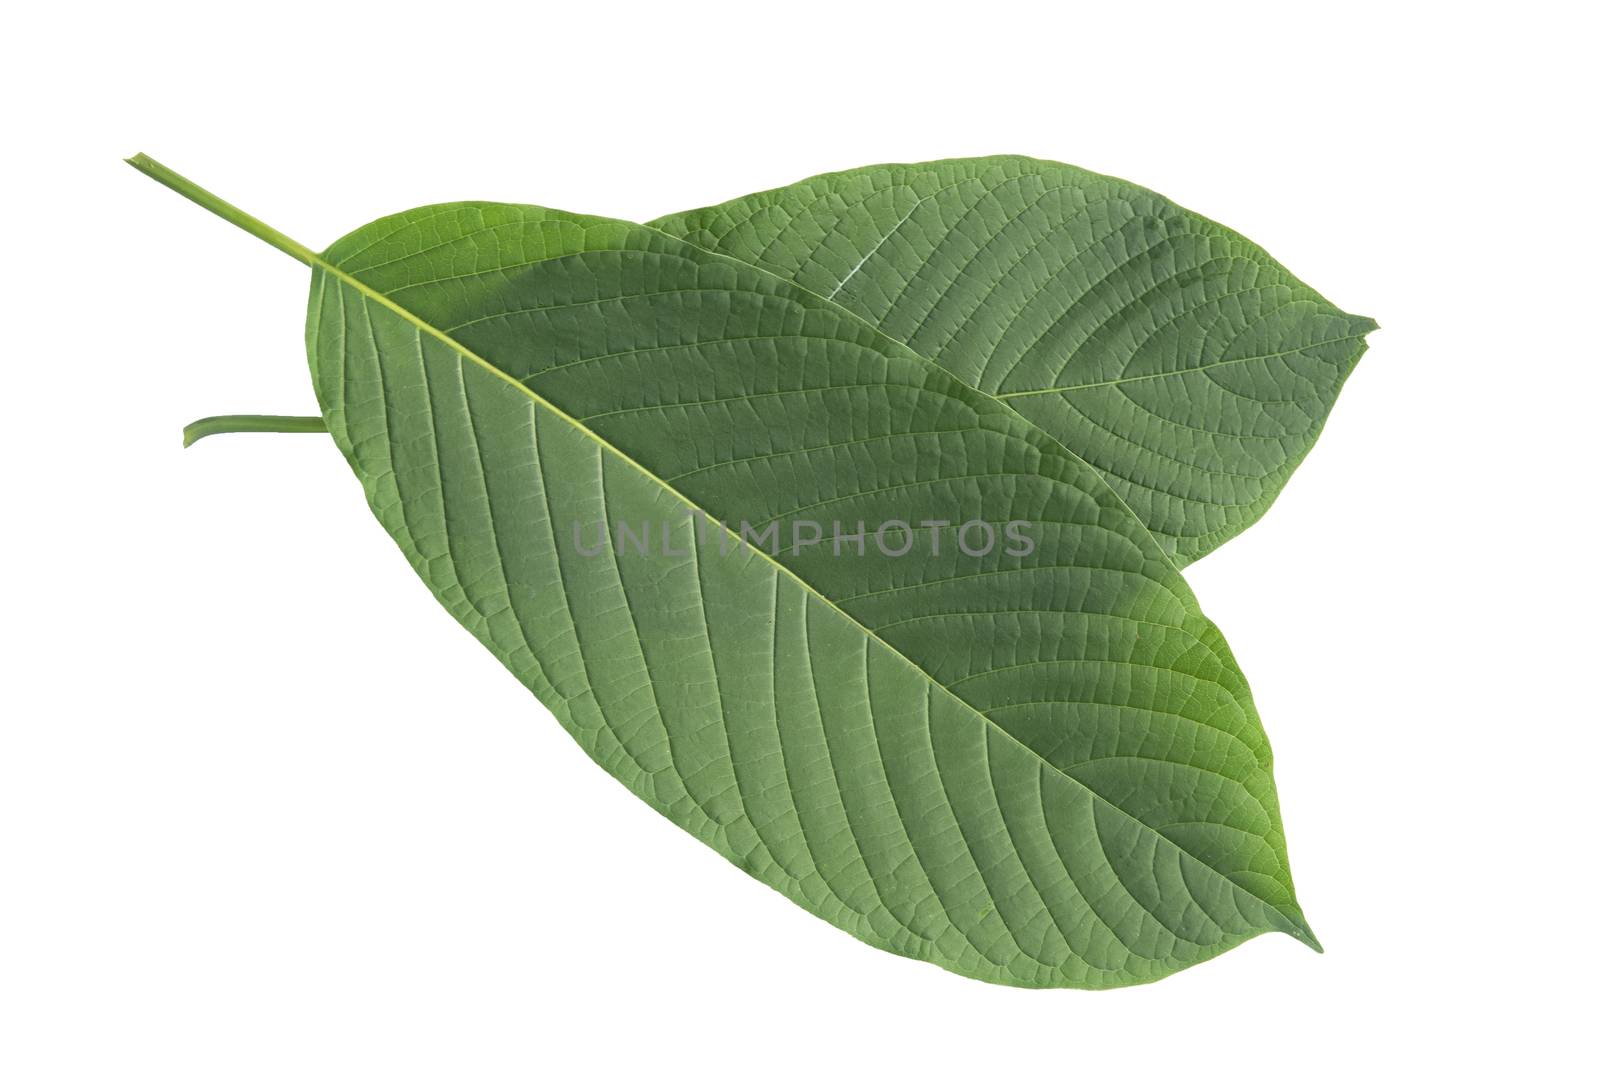 Kratom Leaf (Mitragyna Speciosa) on white background with clipping path.